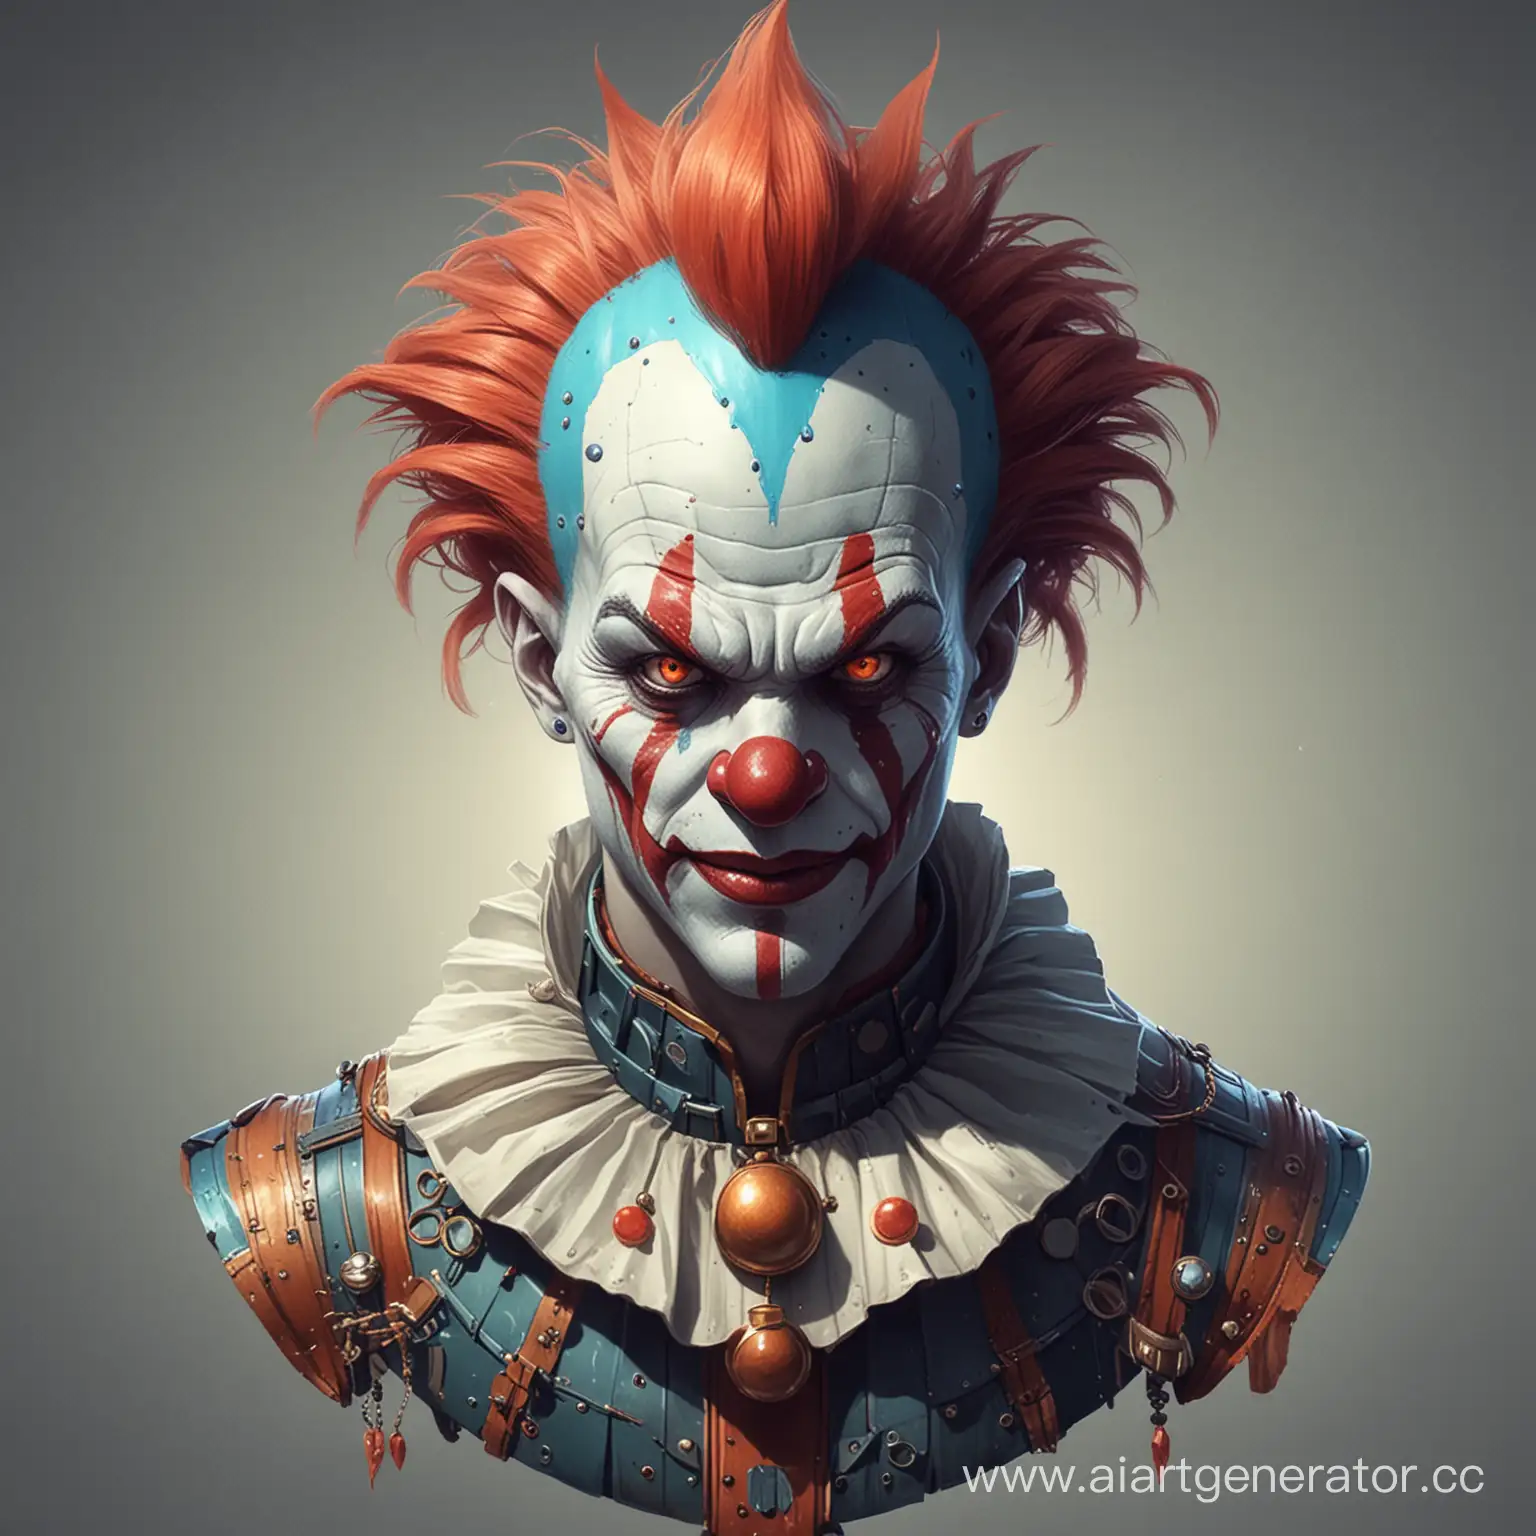 Futuristic-Clown-Avatar-Colorful-and-Playful-Cyberpunk-Character-Design